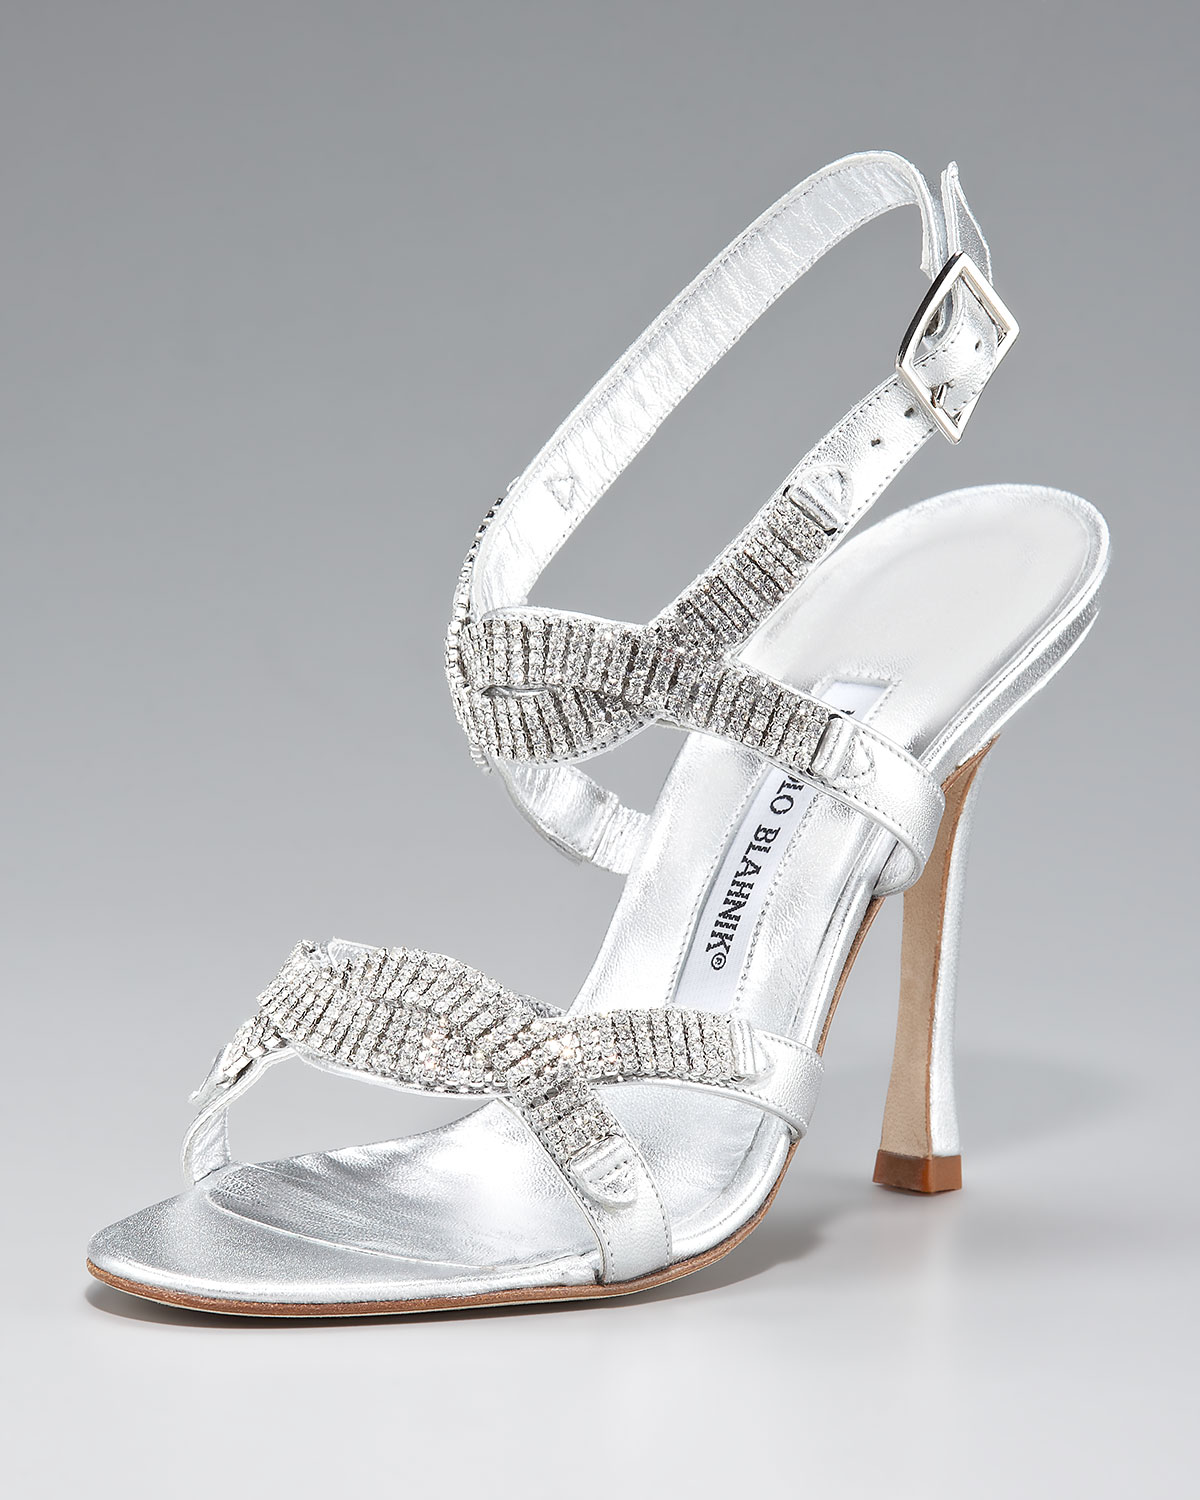 Lyst - Manolo Blahnik Crystal Ankle-strap Sandal in Metallic